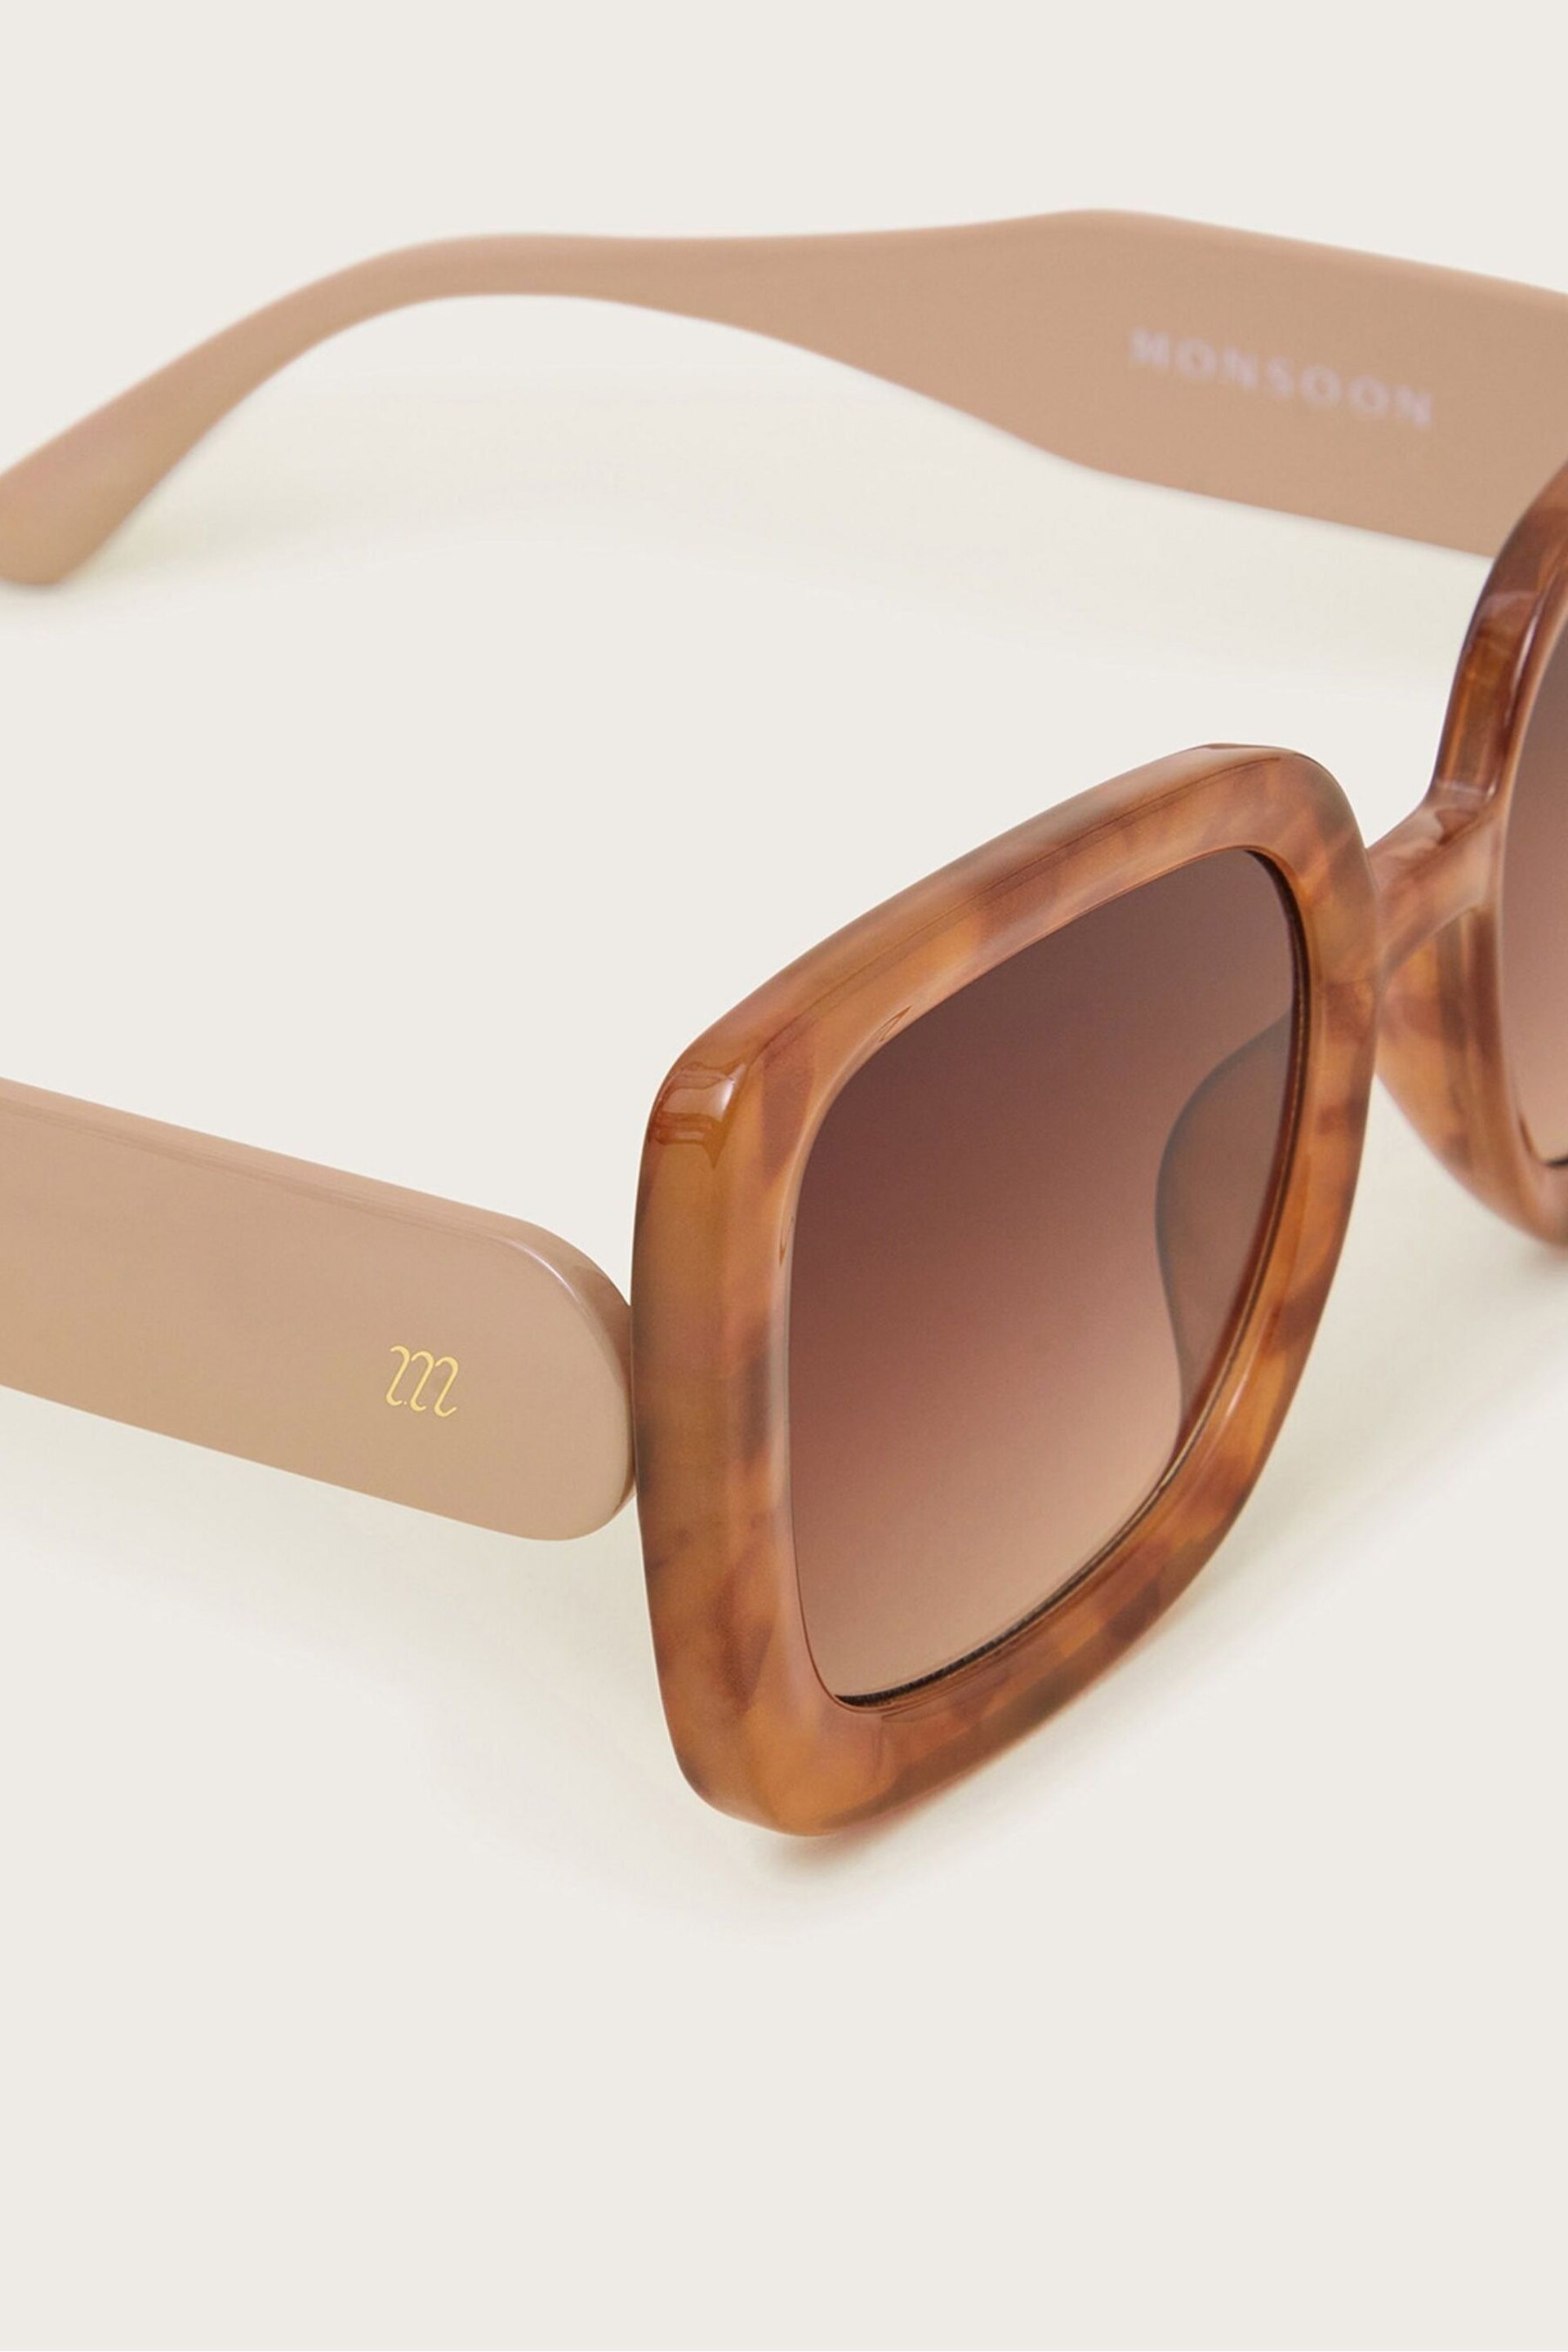 Monsoon Brown Mottled Square Sunglasses - Image 2 of 2